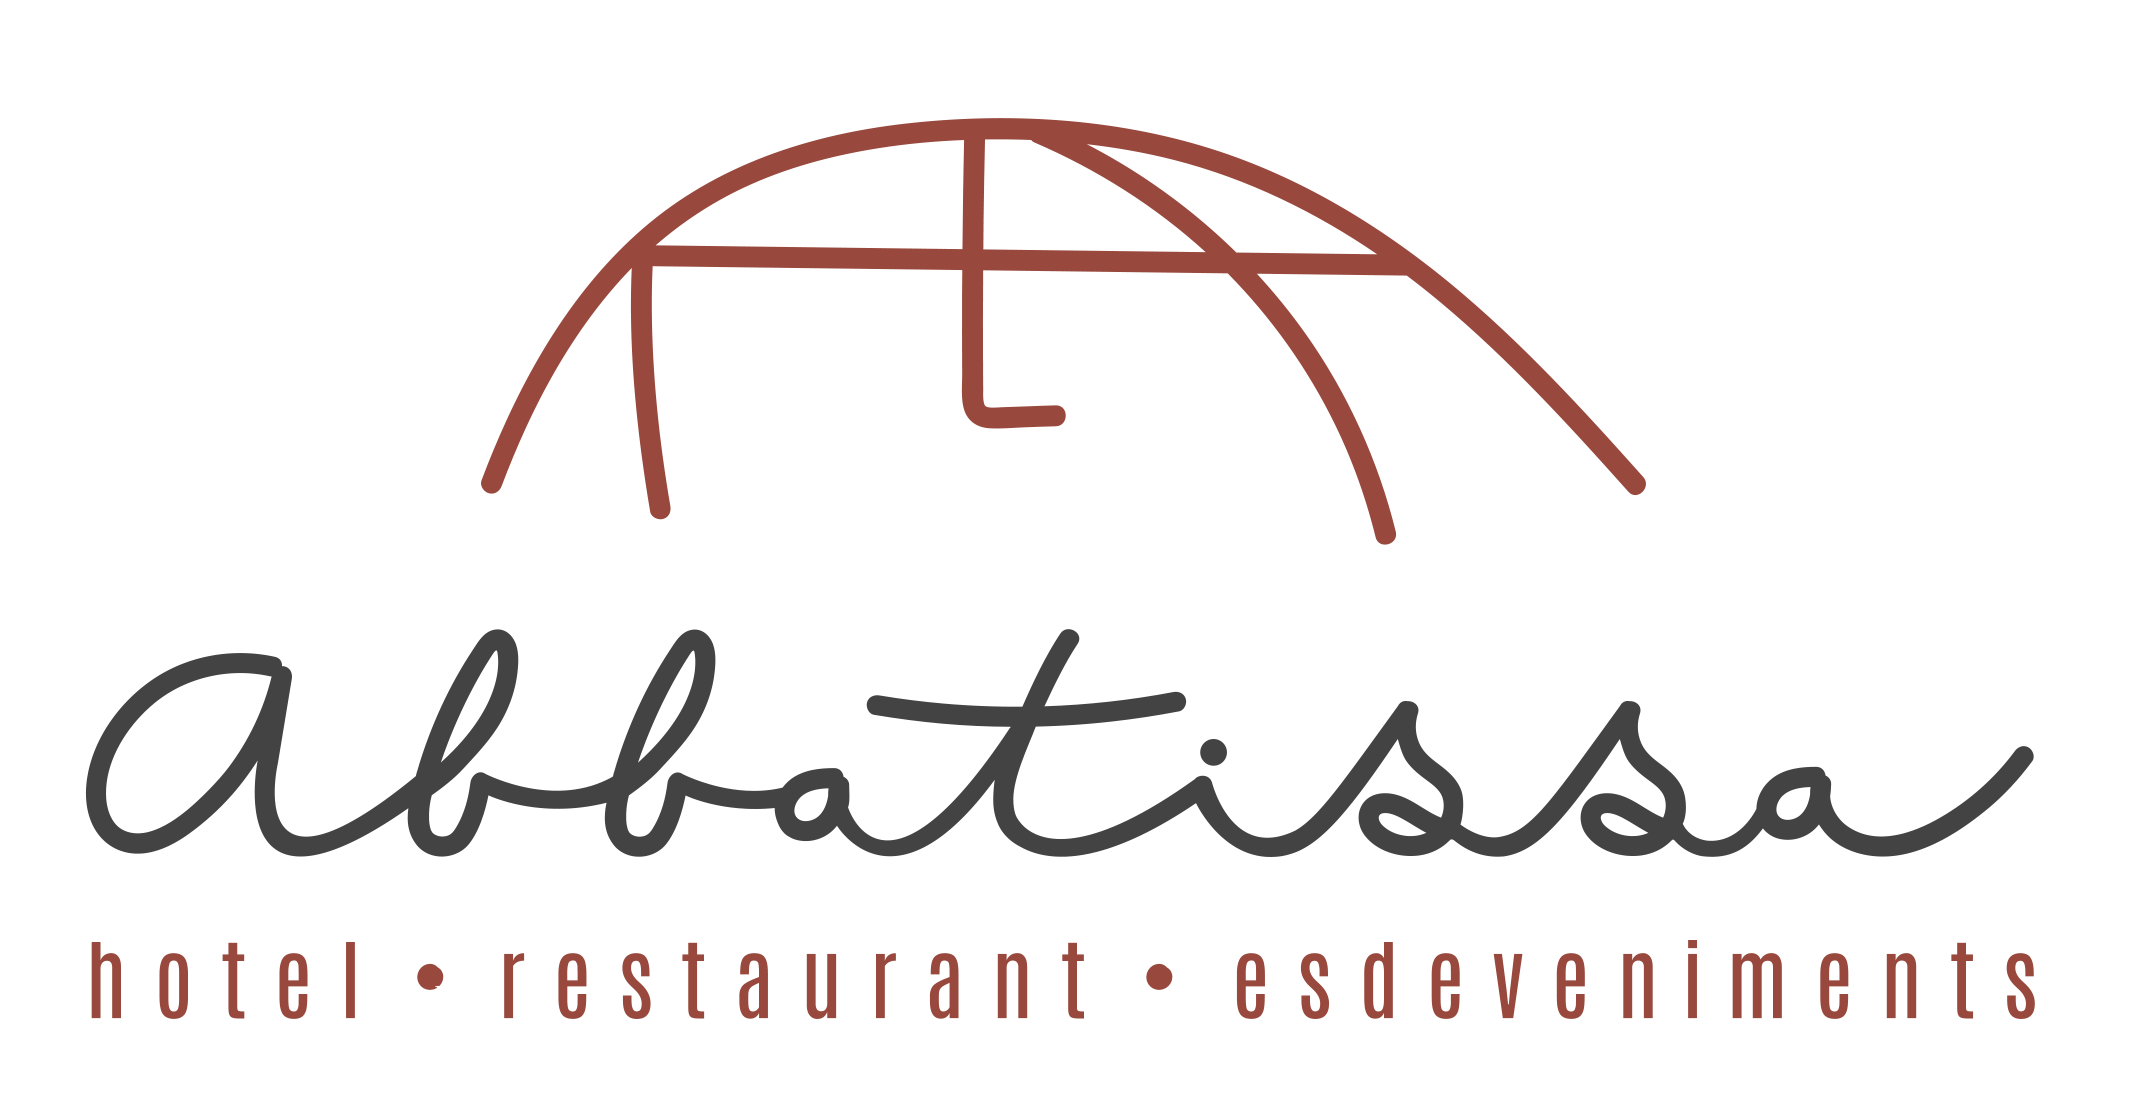 ABBATISSA- HOTEL RESTAURANT ESDEVENIMENTS